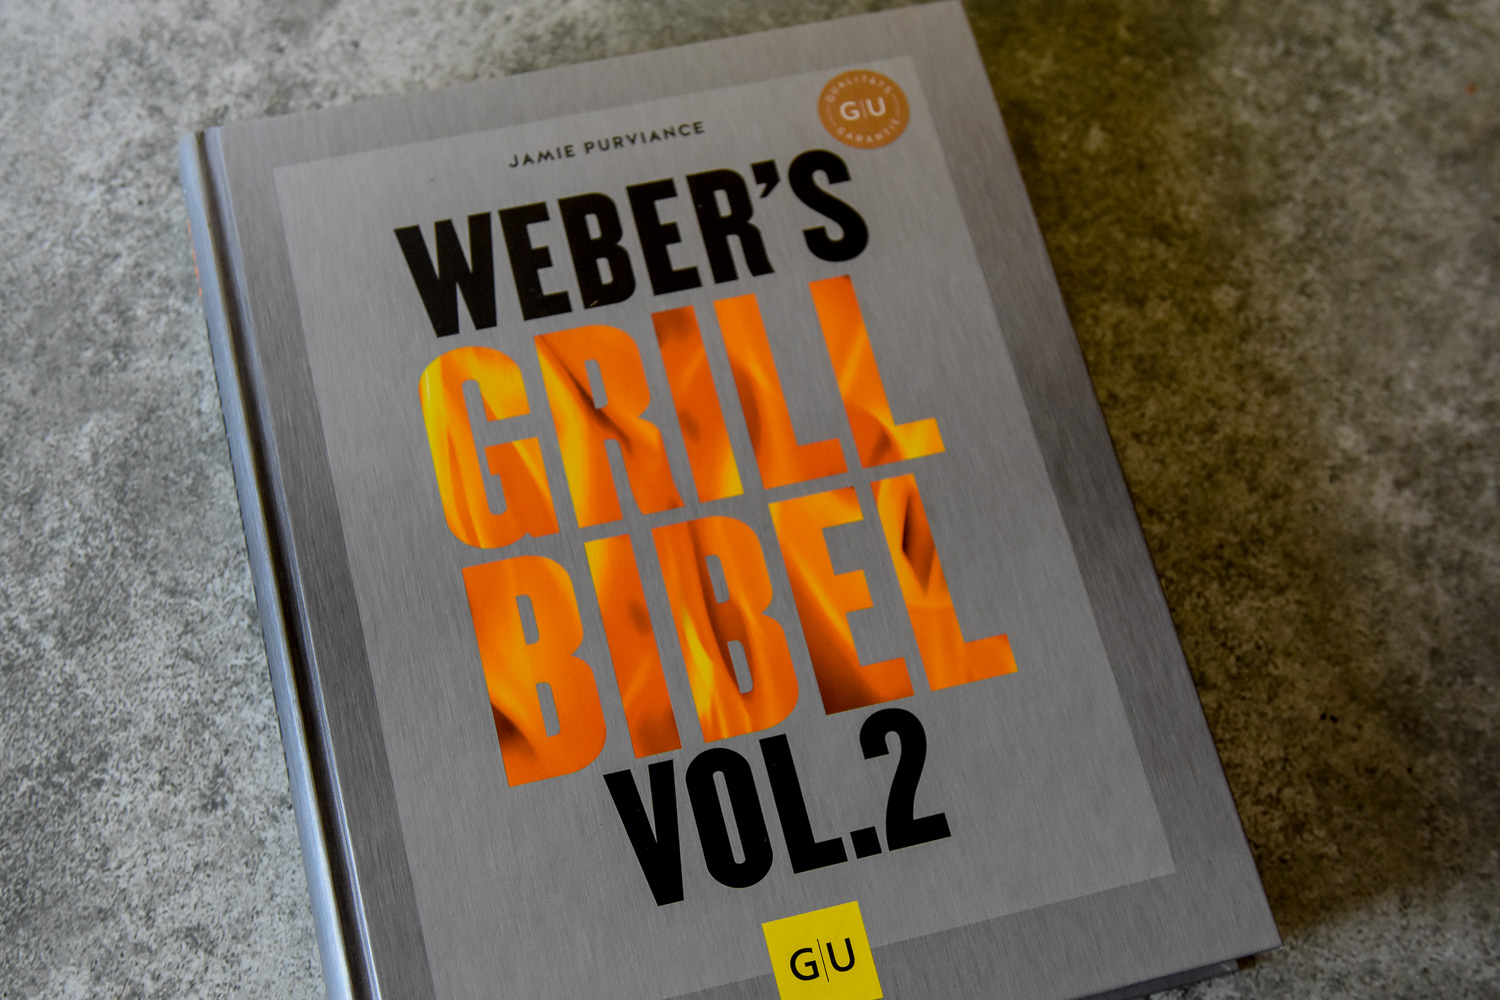 Weber's Grillbibel Vol 2 